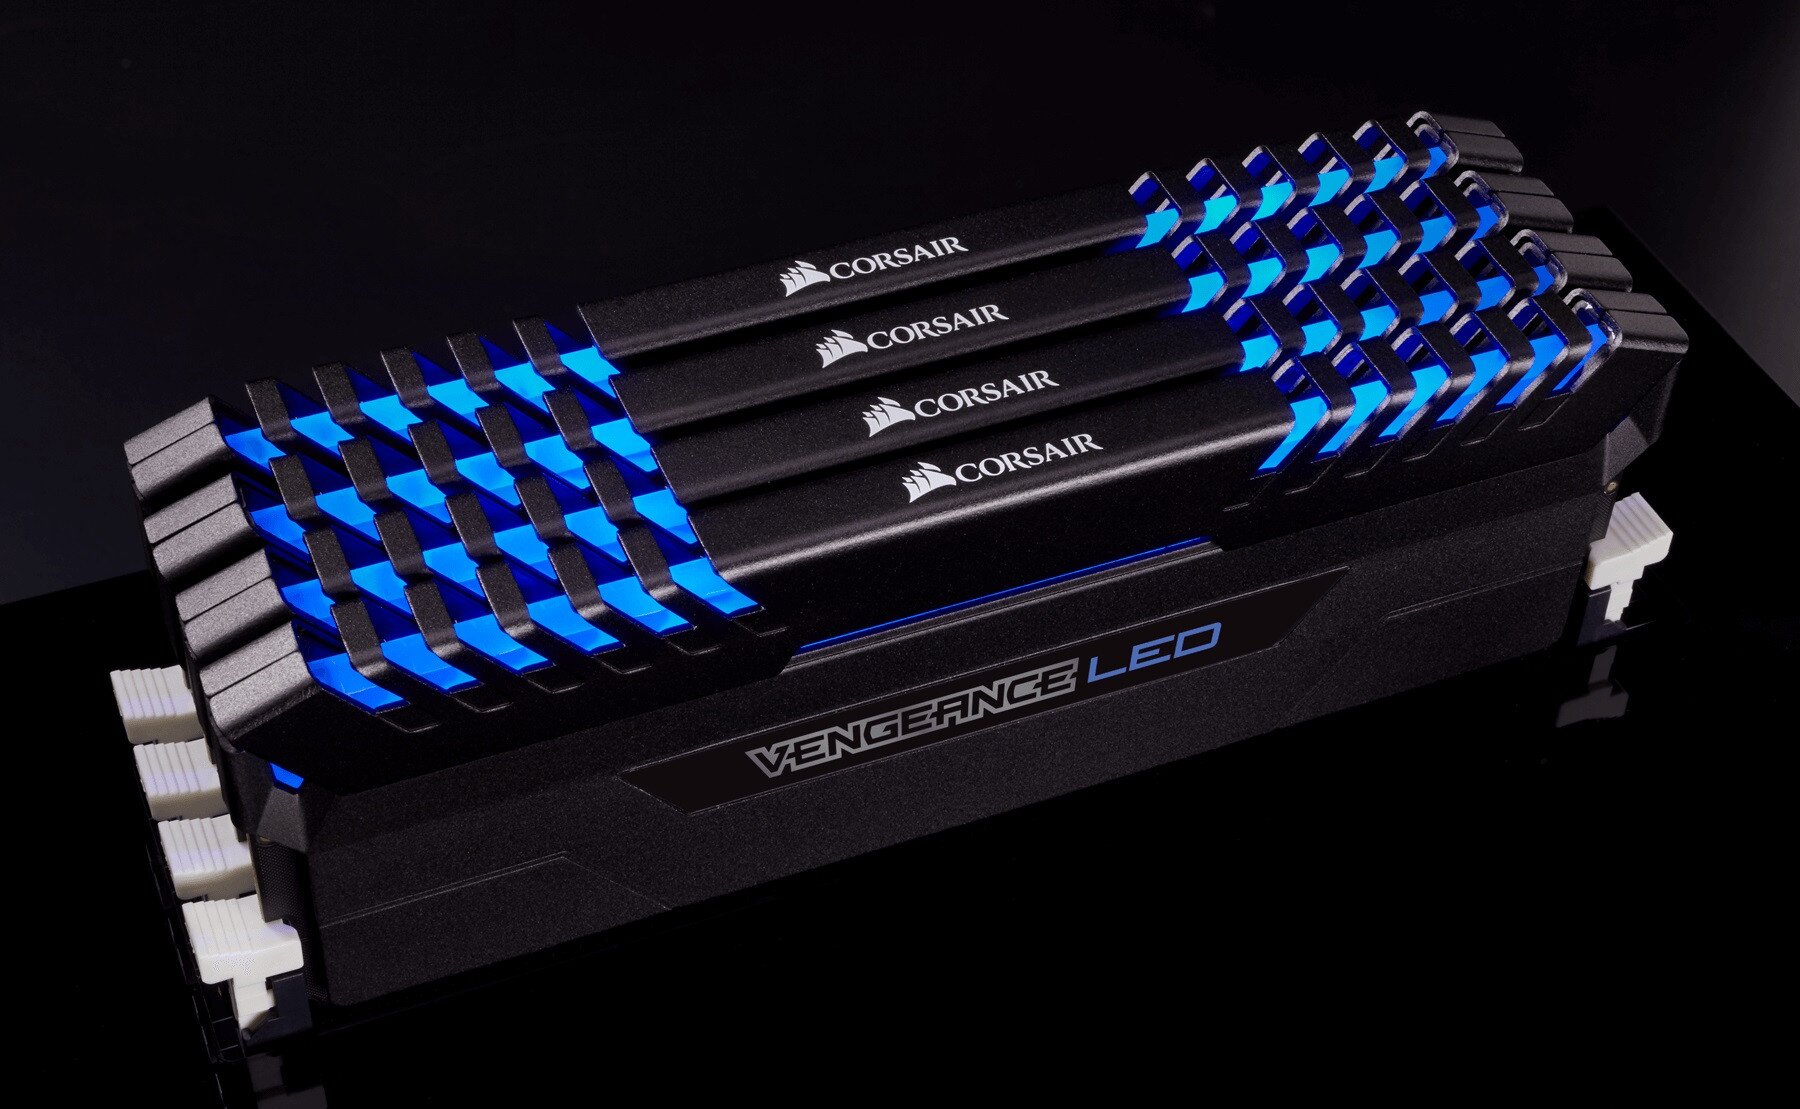 Buy Corsair Vengeance LED - 32GB (4 x 8GB) DDR4 DRAM - 2666MHz Memory Kit - Blue LED online Worldwide - Tejar.com